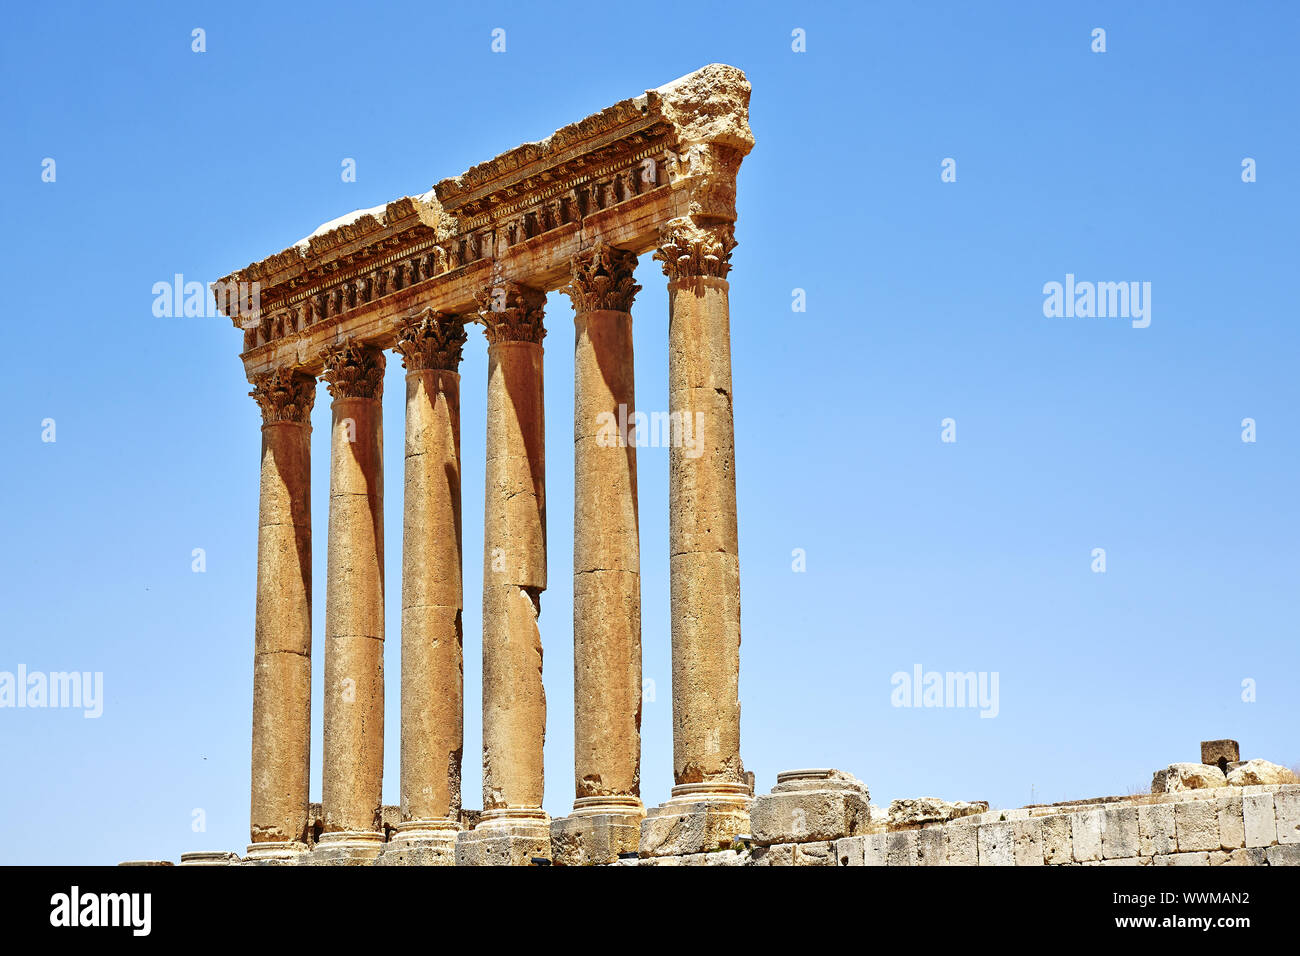 Les colonnes de Jupiter (Temple de Jupiter) - Baalbek, Liban Banque D'Images